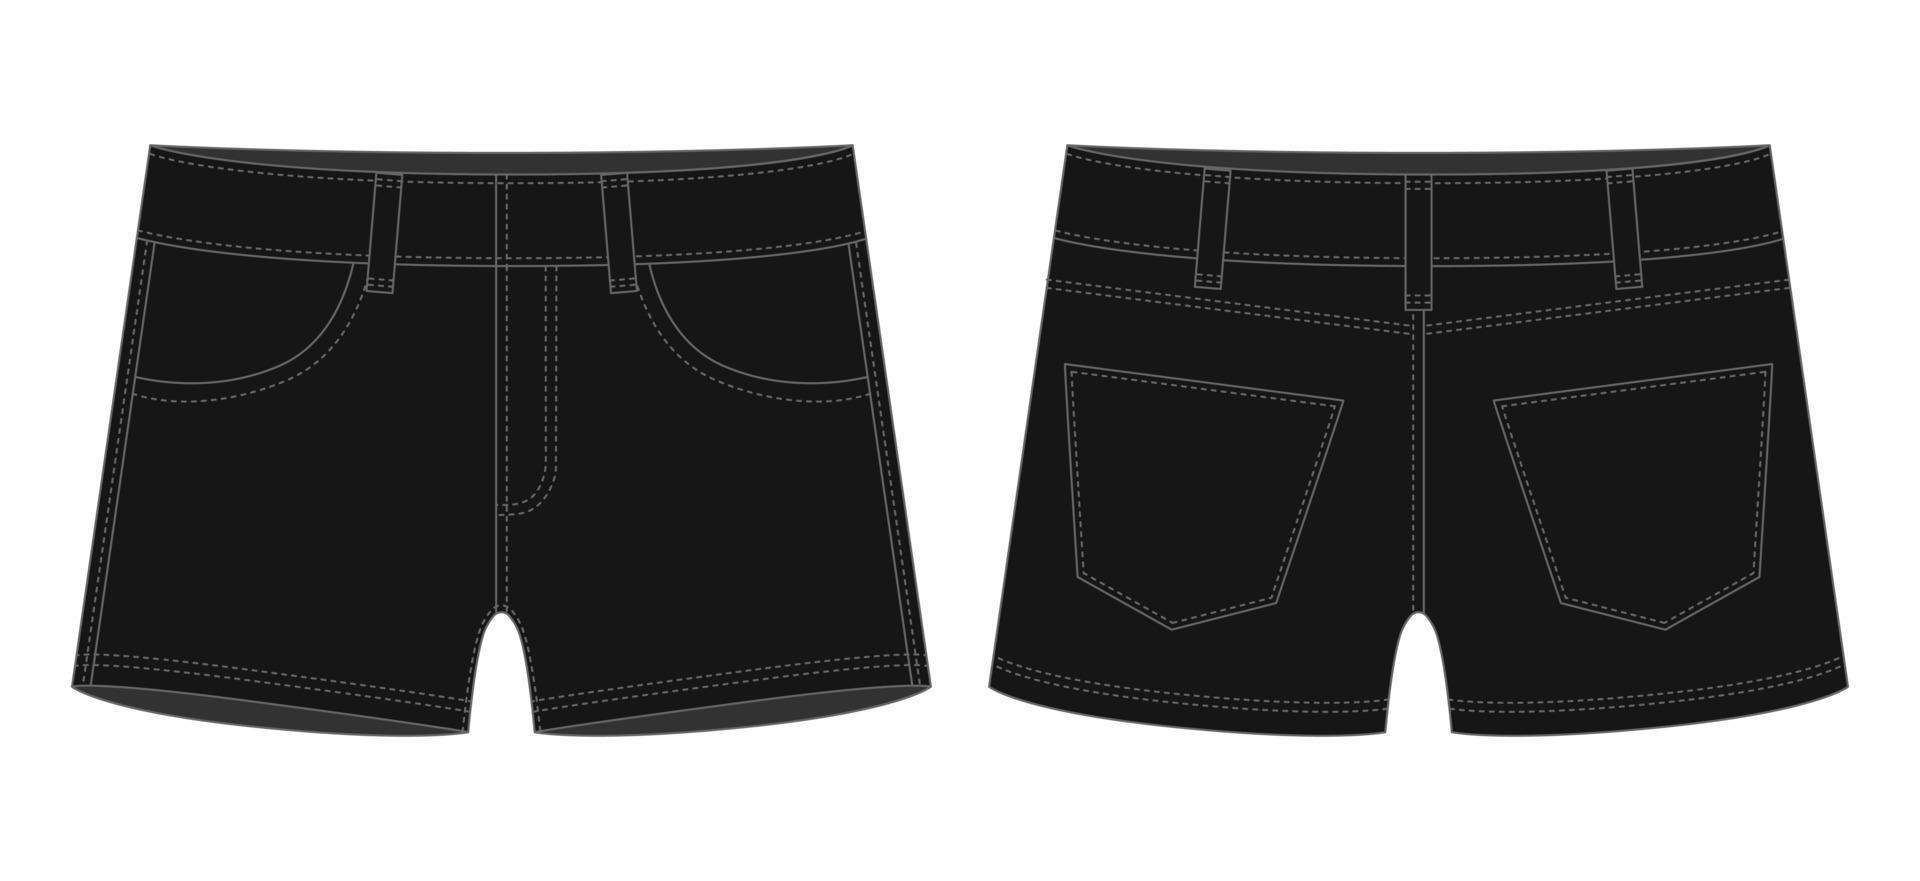 Denim short with pockets technical sketch. Black color. Kids jeans shorts design template. vector